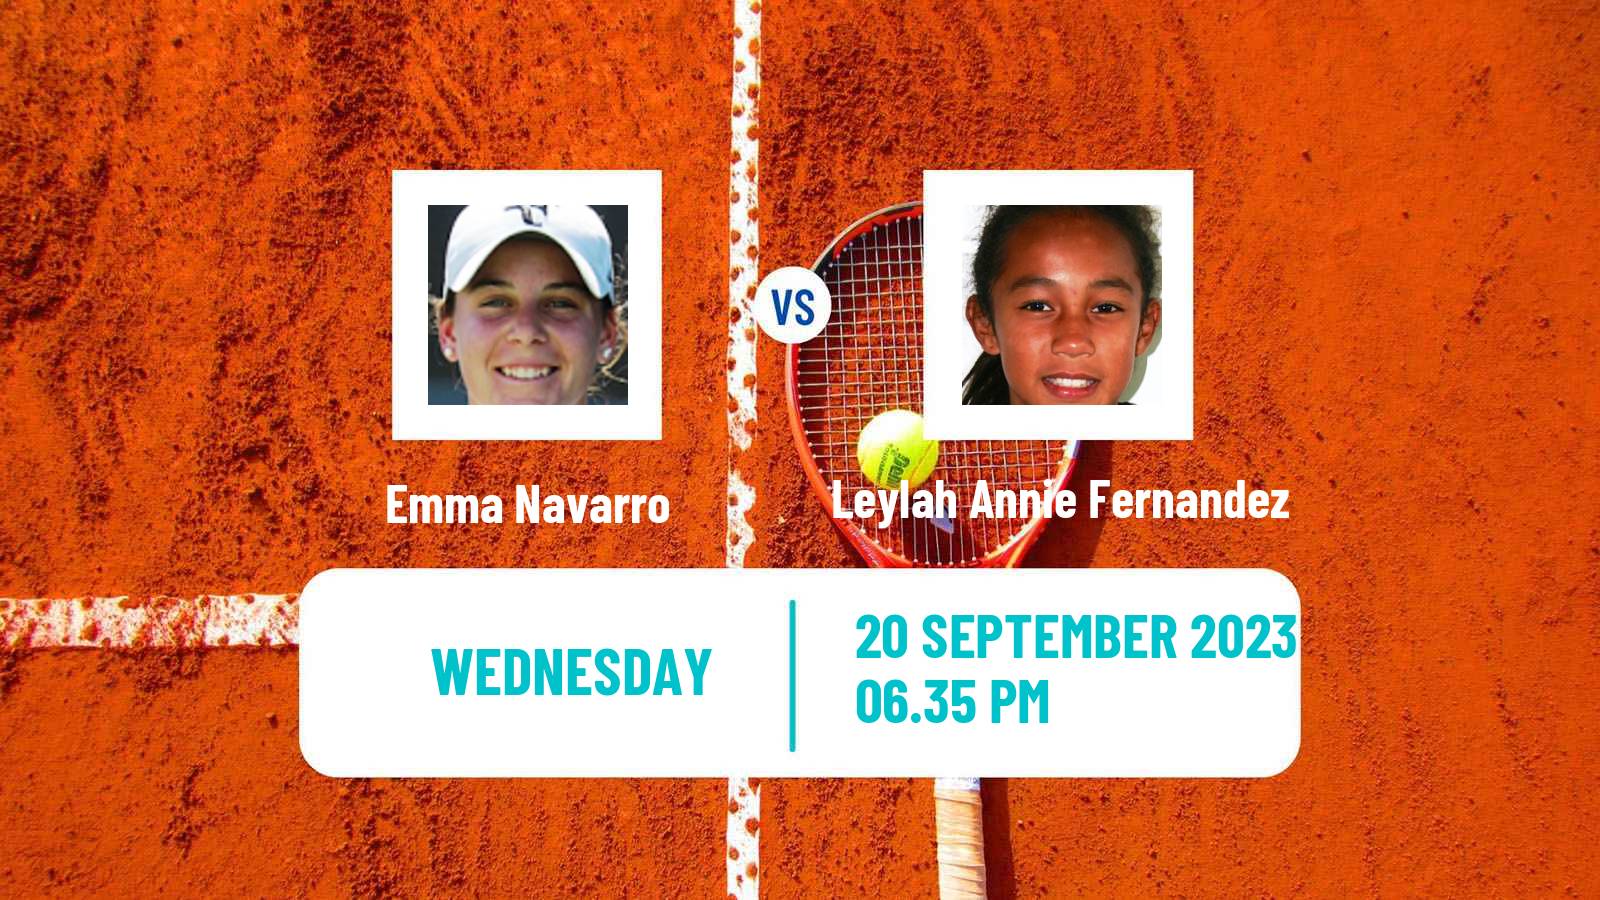 Tennis WTA Guadalajara Emma Navarro - Leylah Annie Fernandez